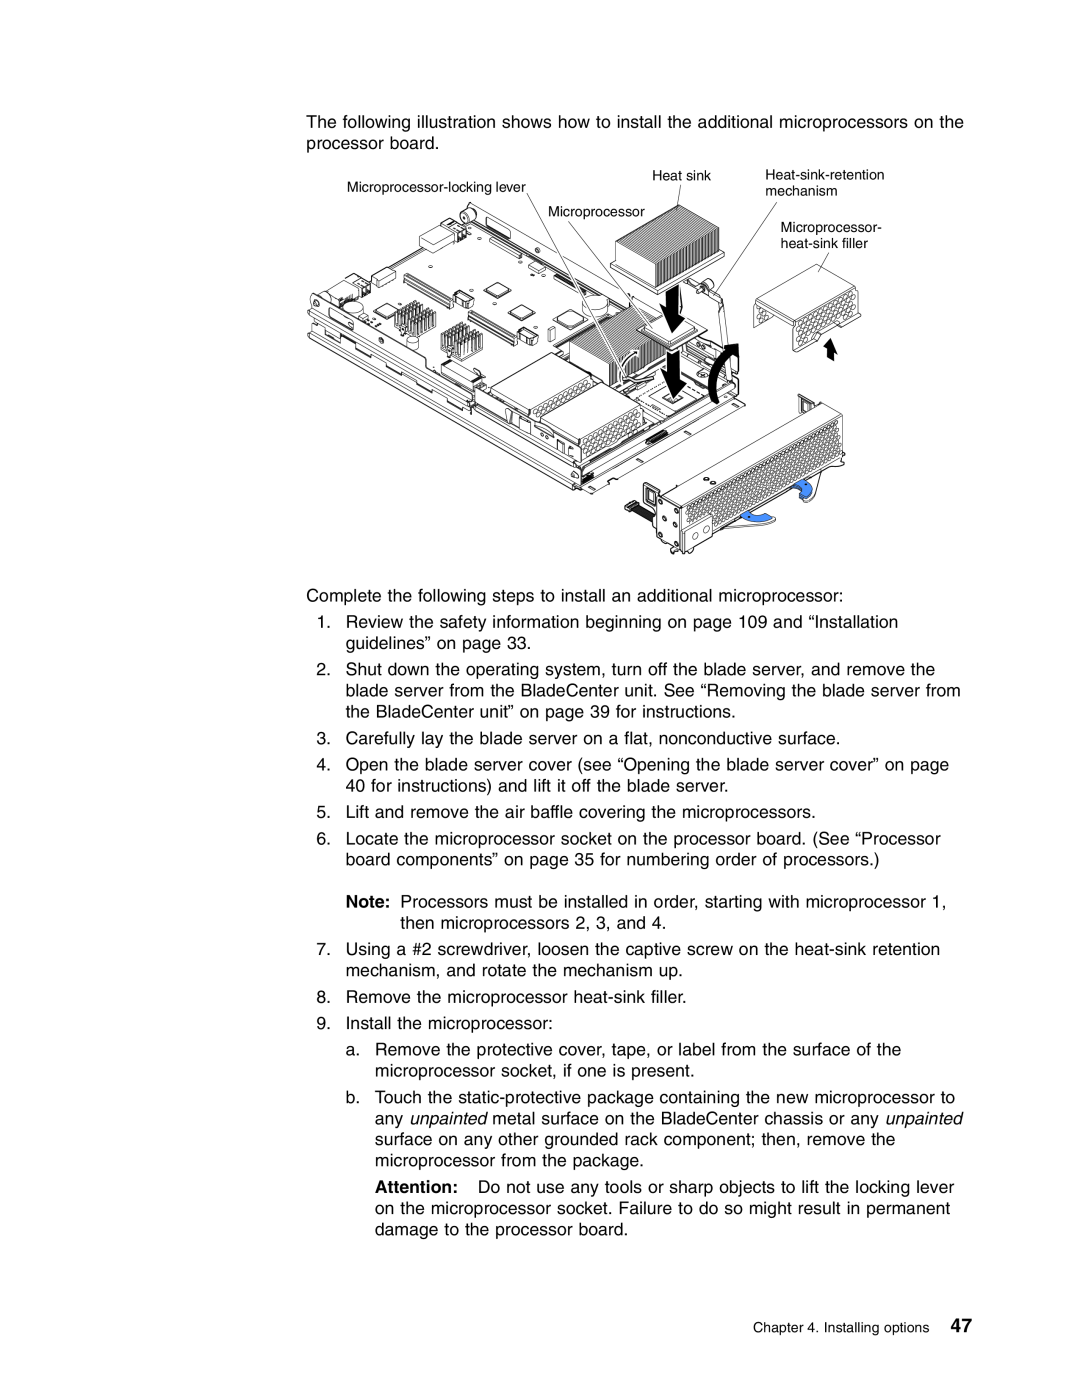 IBM HS40 manual Heat-sink-retention, Microprocessor 